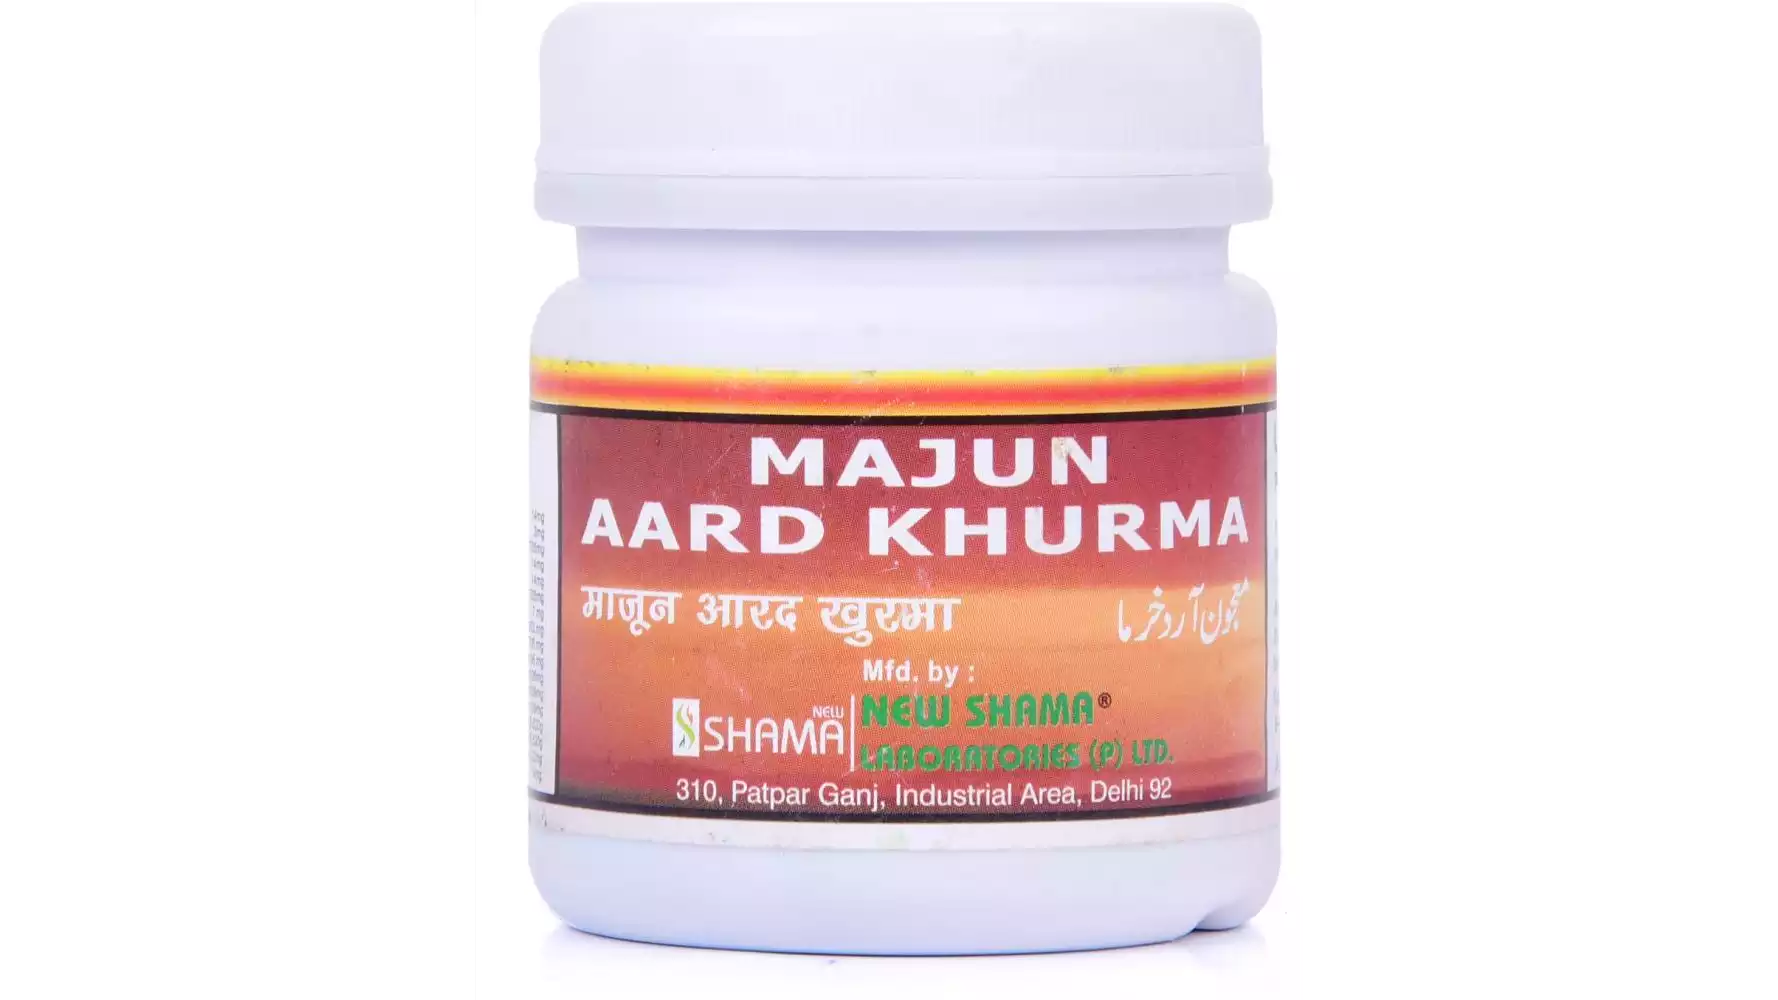 New Shama Majun Arad Khurma (125g)